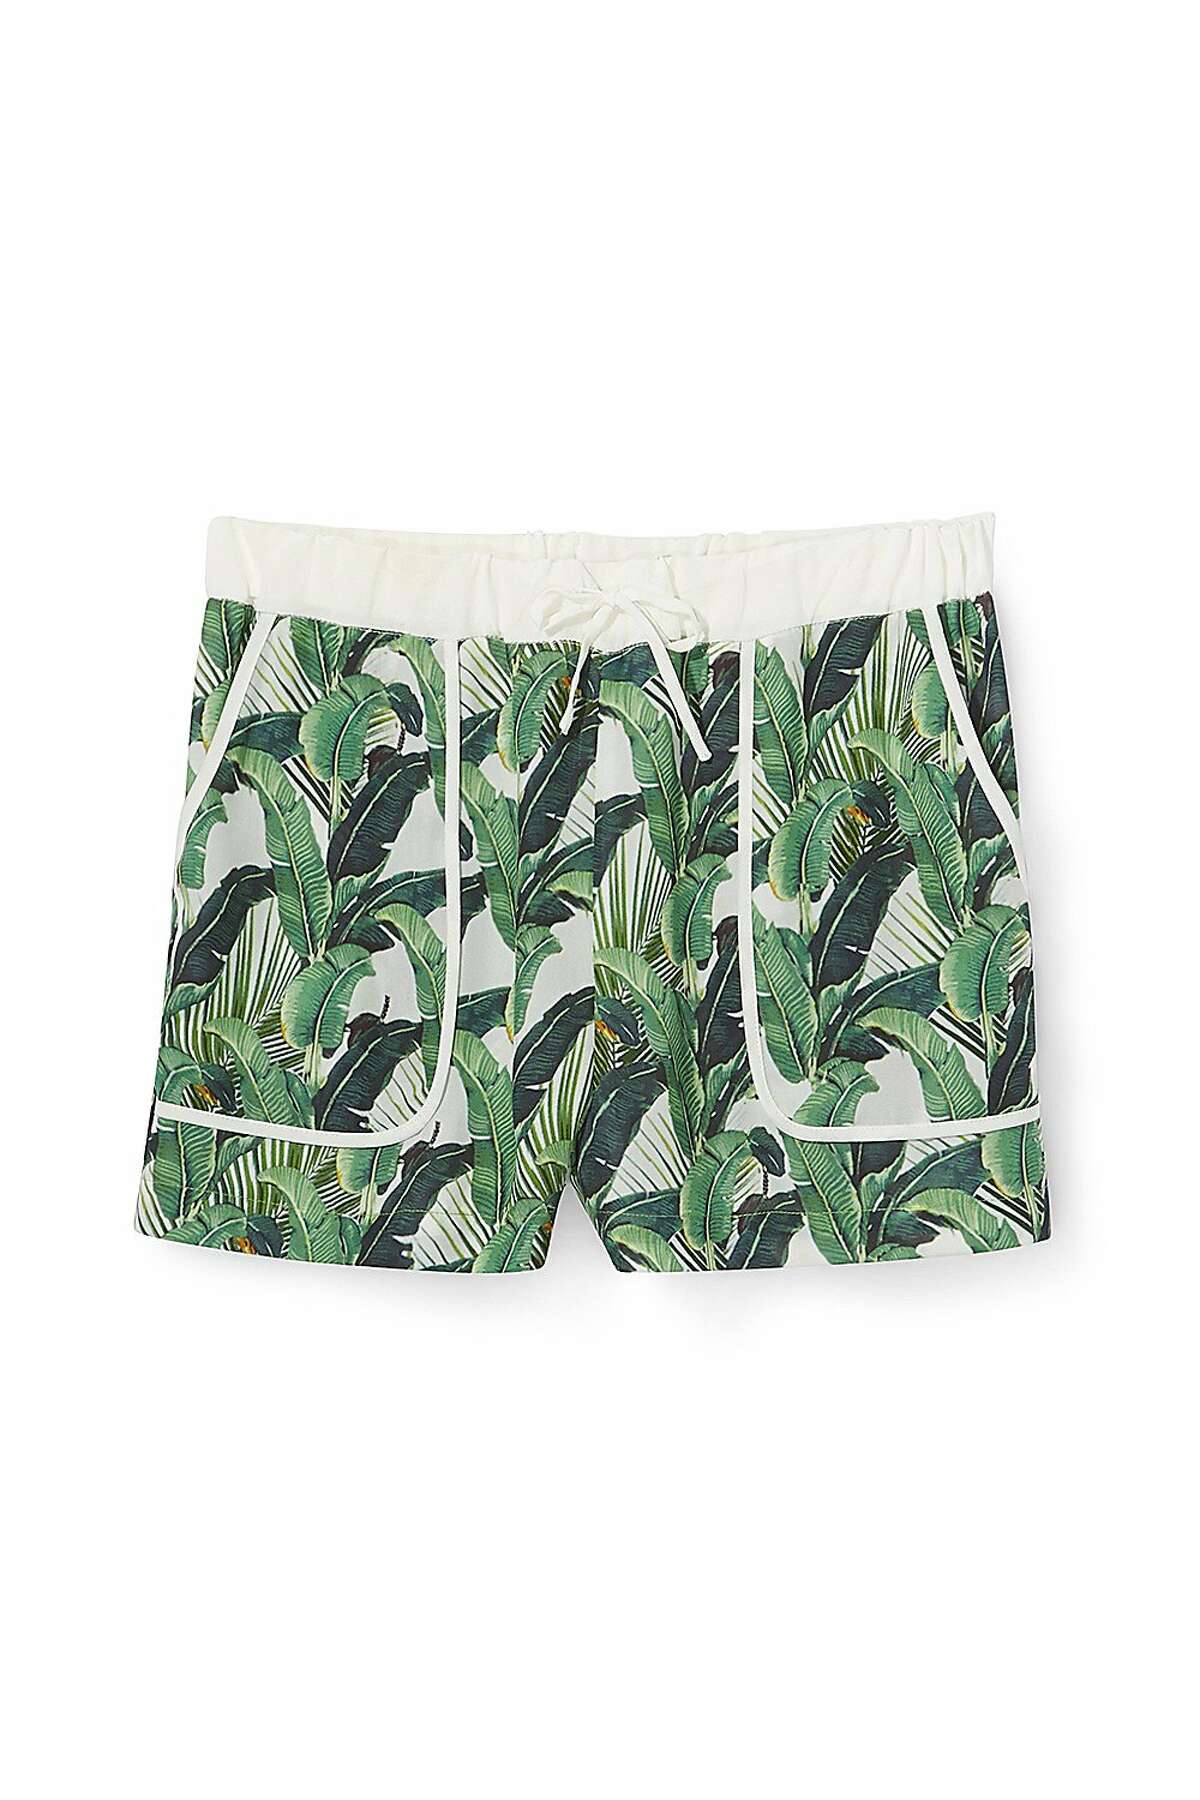 Rebecca Minkoff's Valencia print shorts are a spring 2015 style.